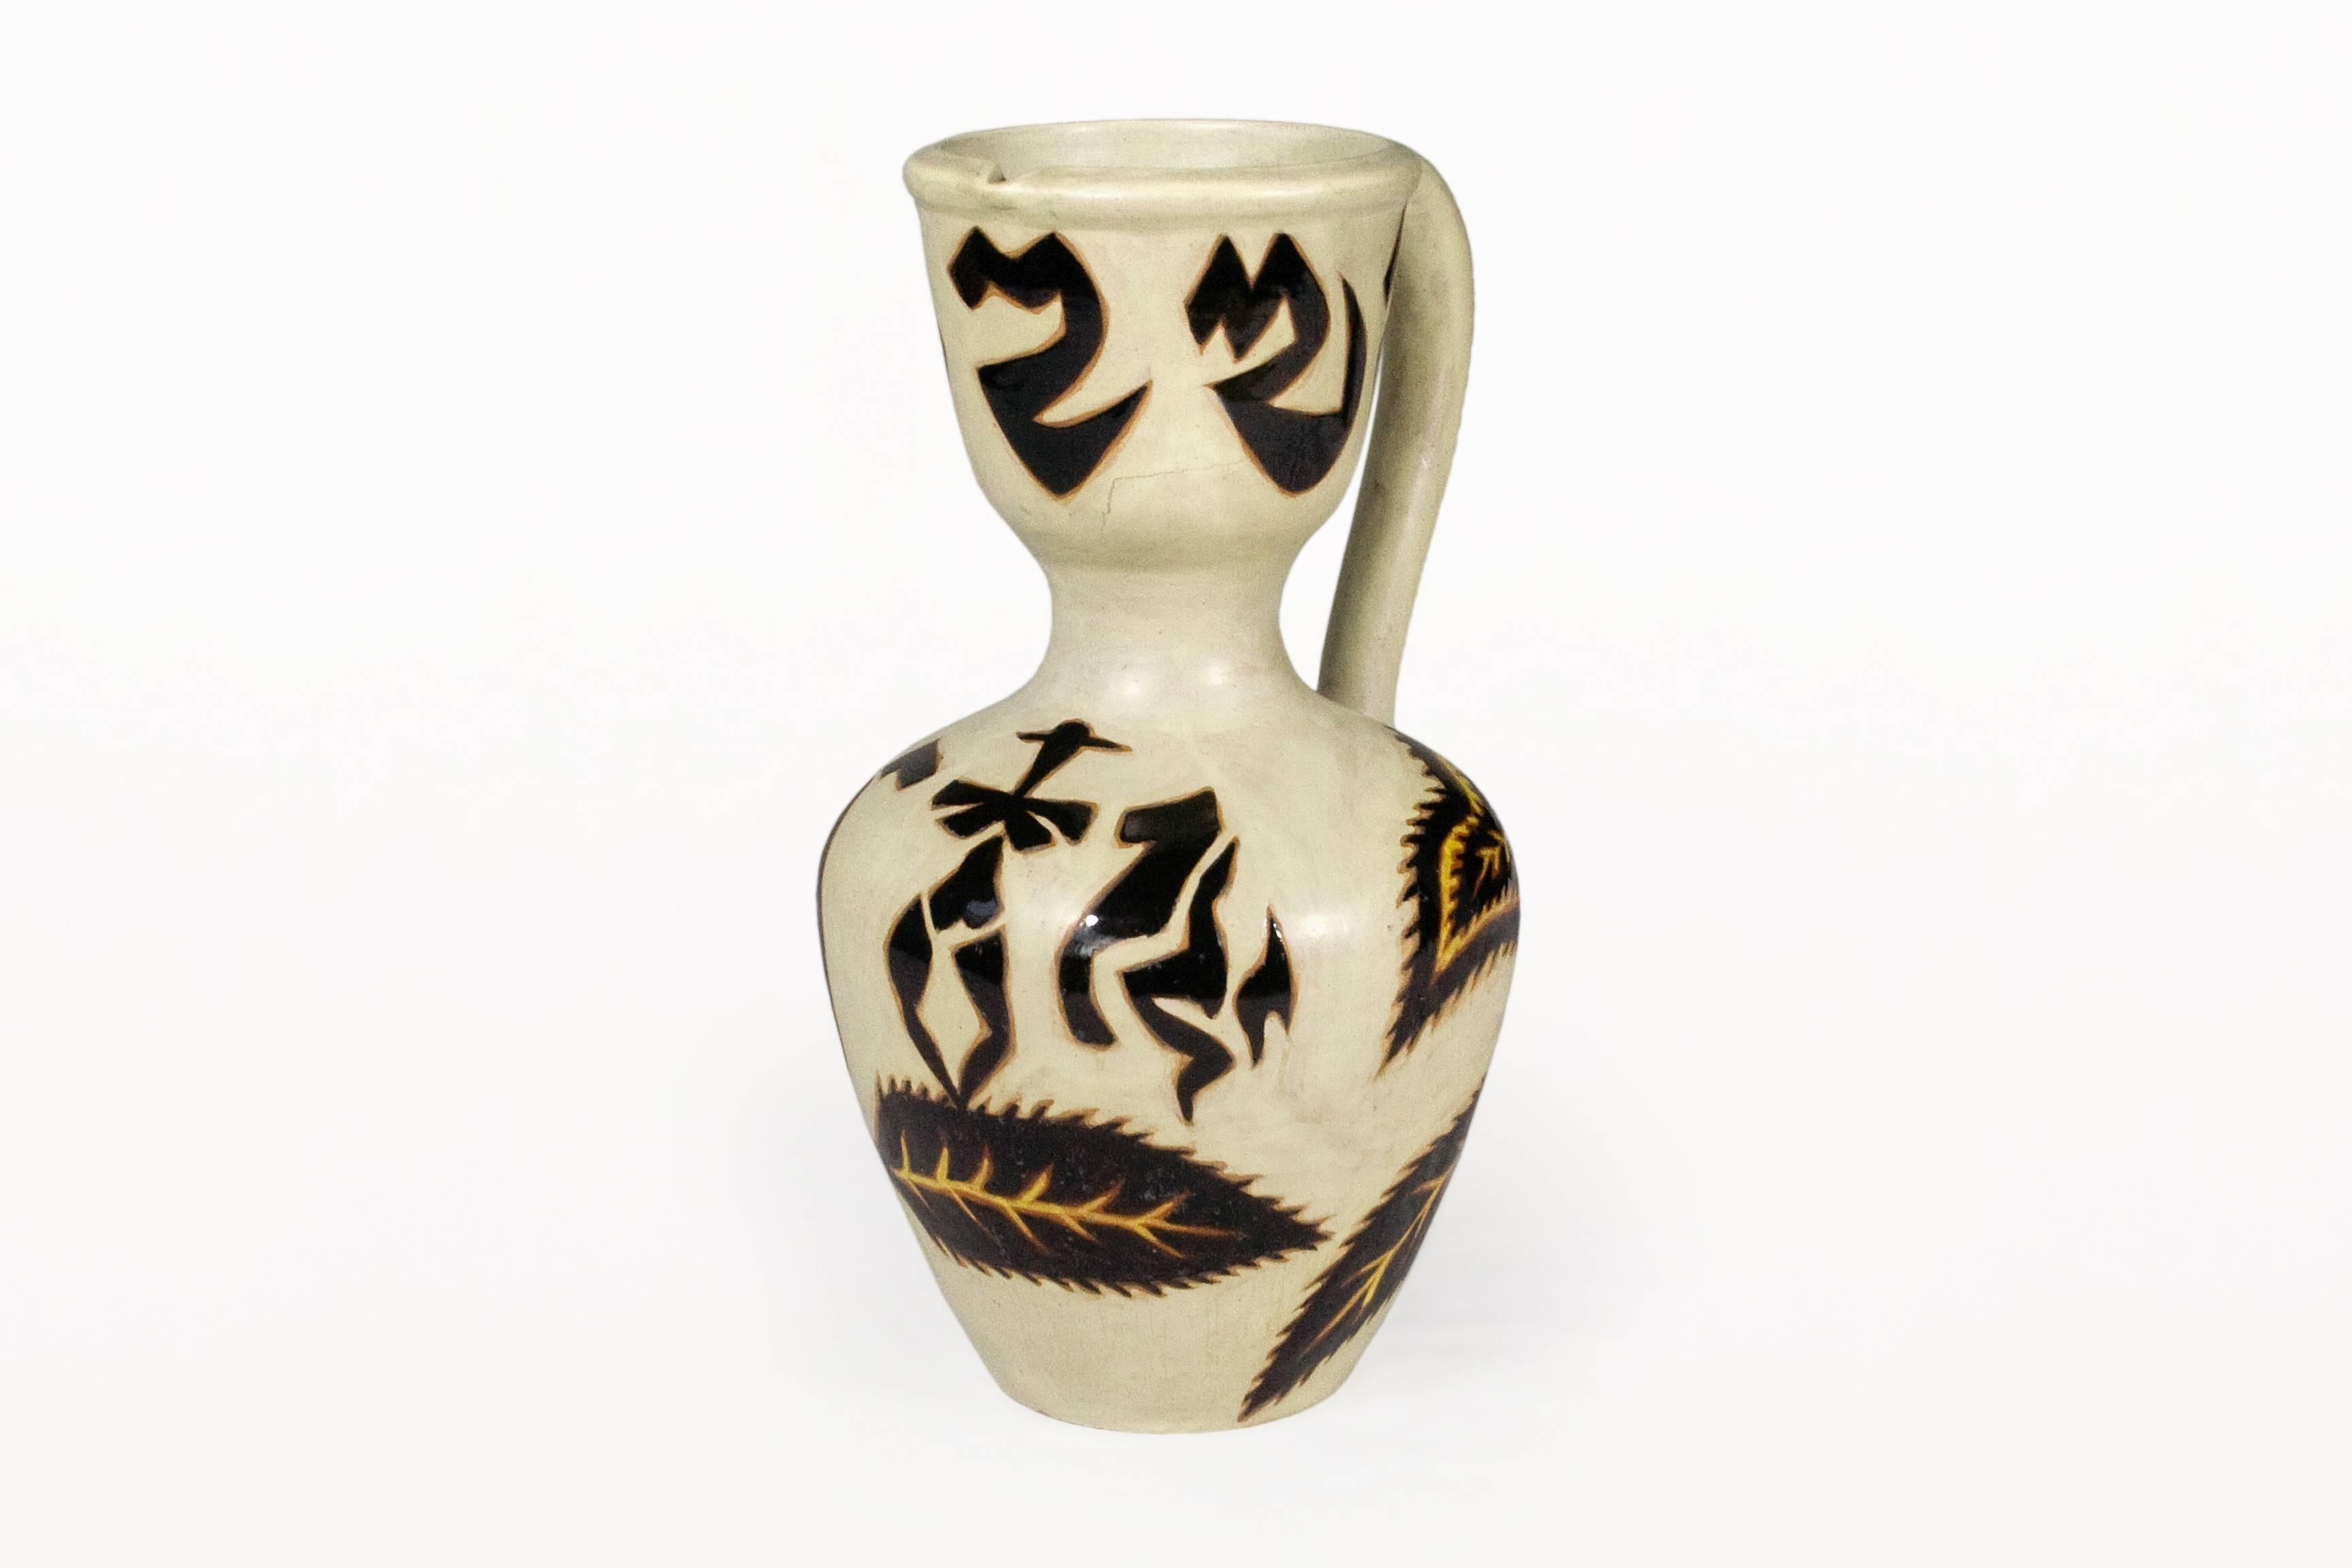 Jean Lurçat Vase, San Vincens.
Ceramic vase,
circa 1960, France. 
Very good vintage condition.